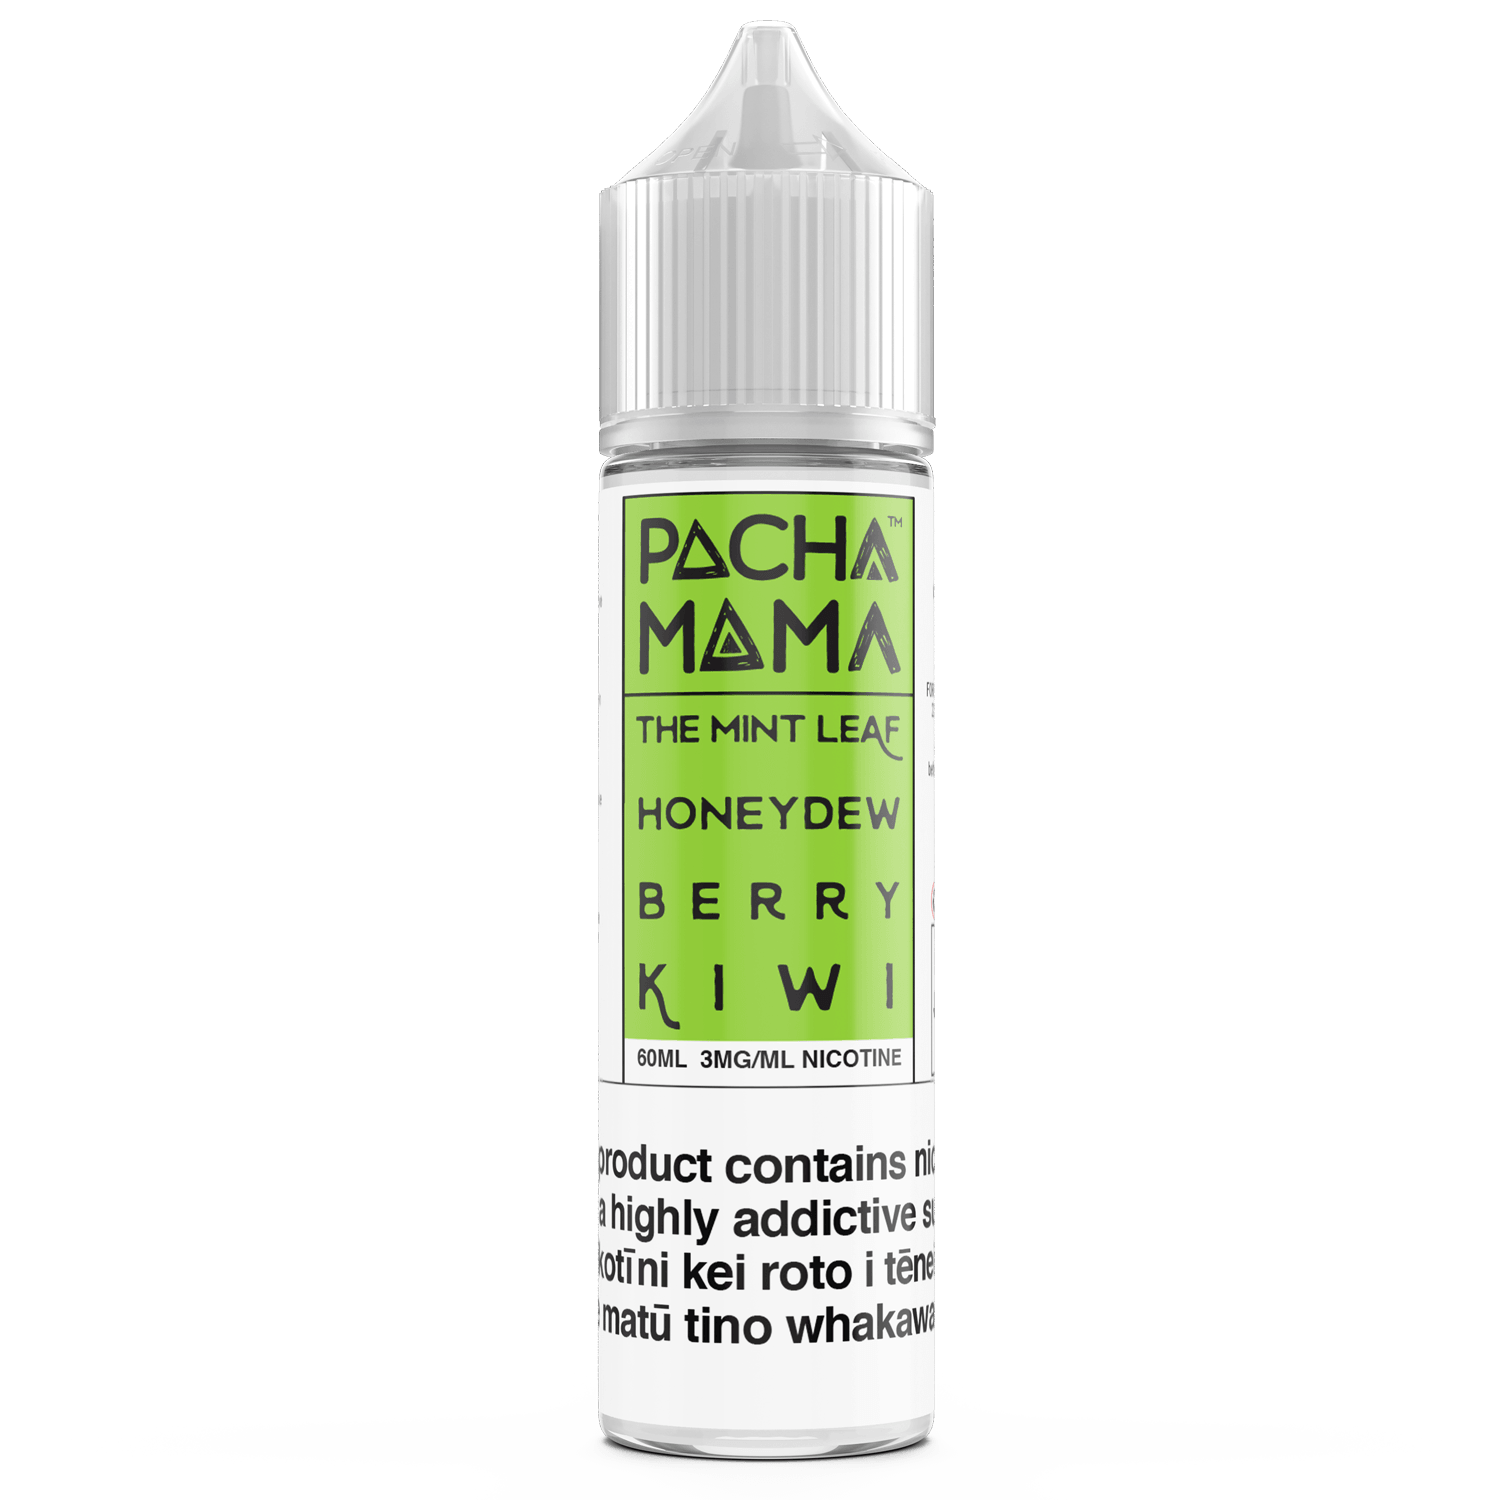 Pacha Mama - The Mint Leaf Honeydew Berry Kiwi - Vape Vend